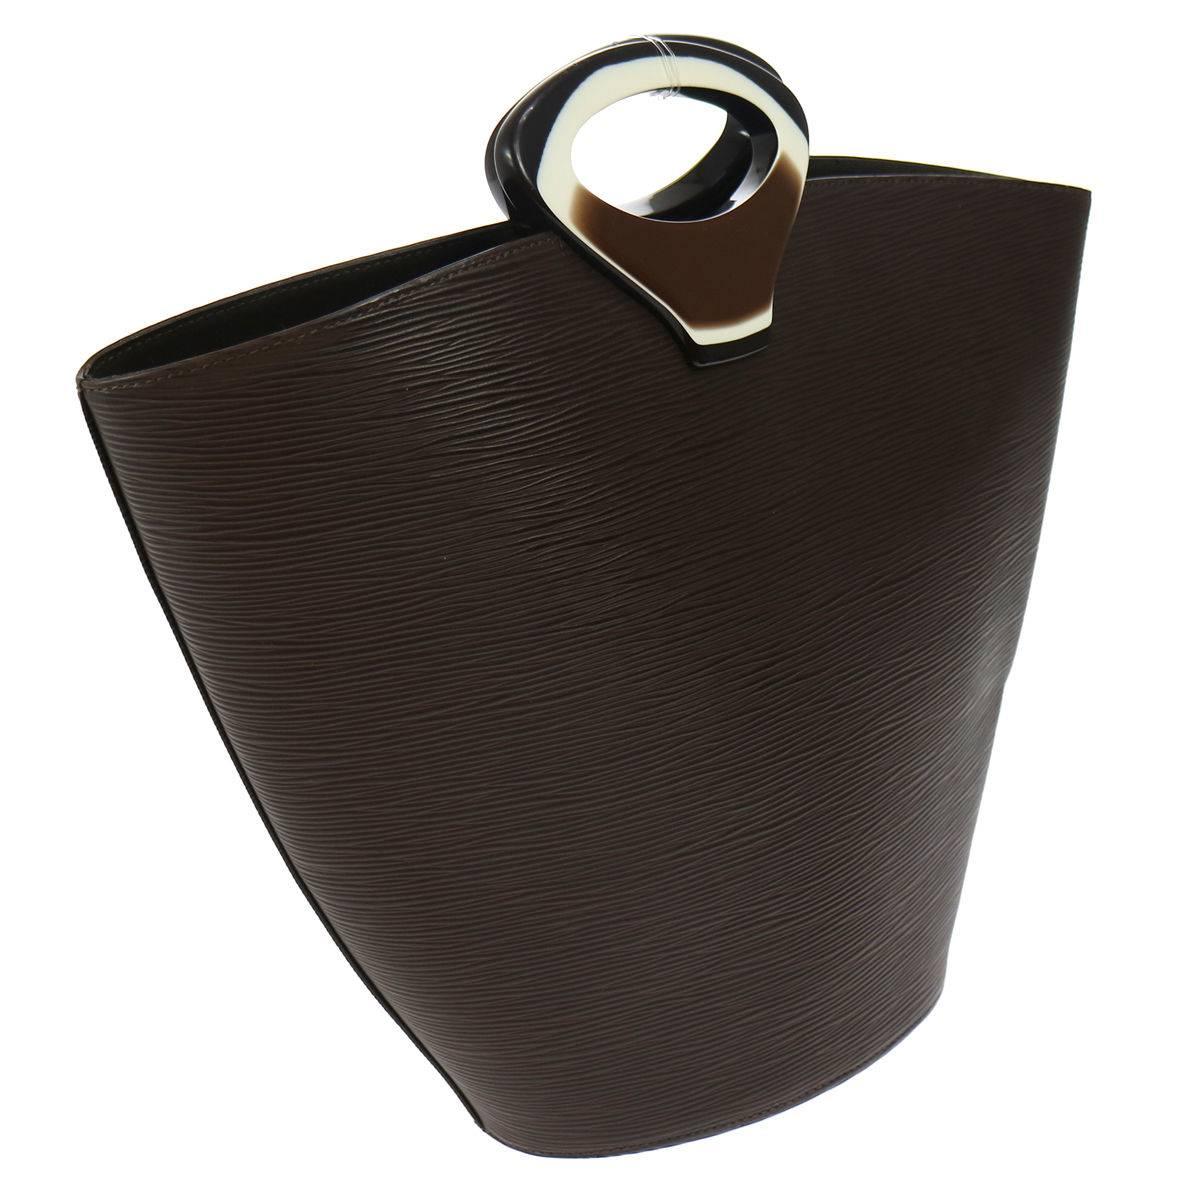 Black Louis Vuitton Brown Leather Top Handle Satchel Tote Carryall Travel Bag